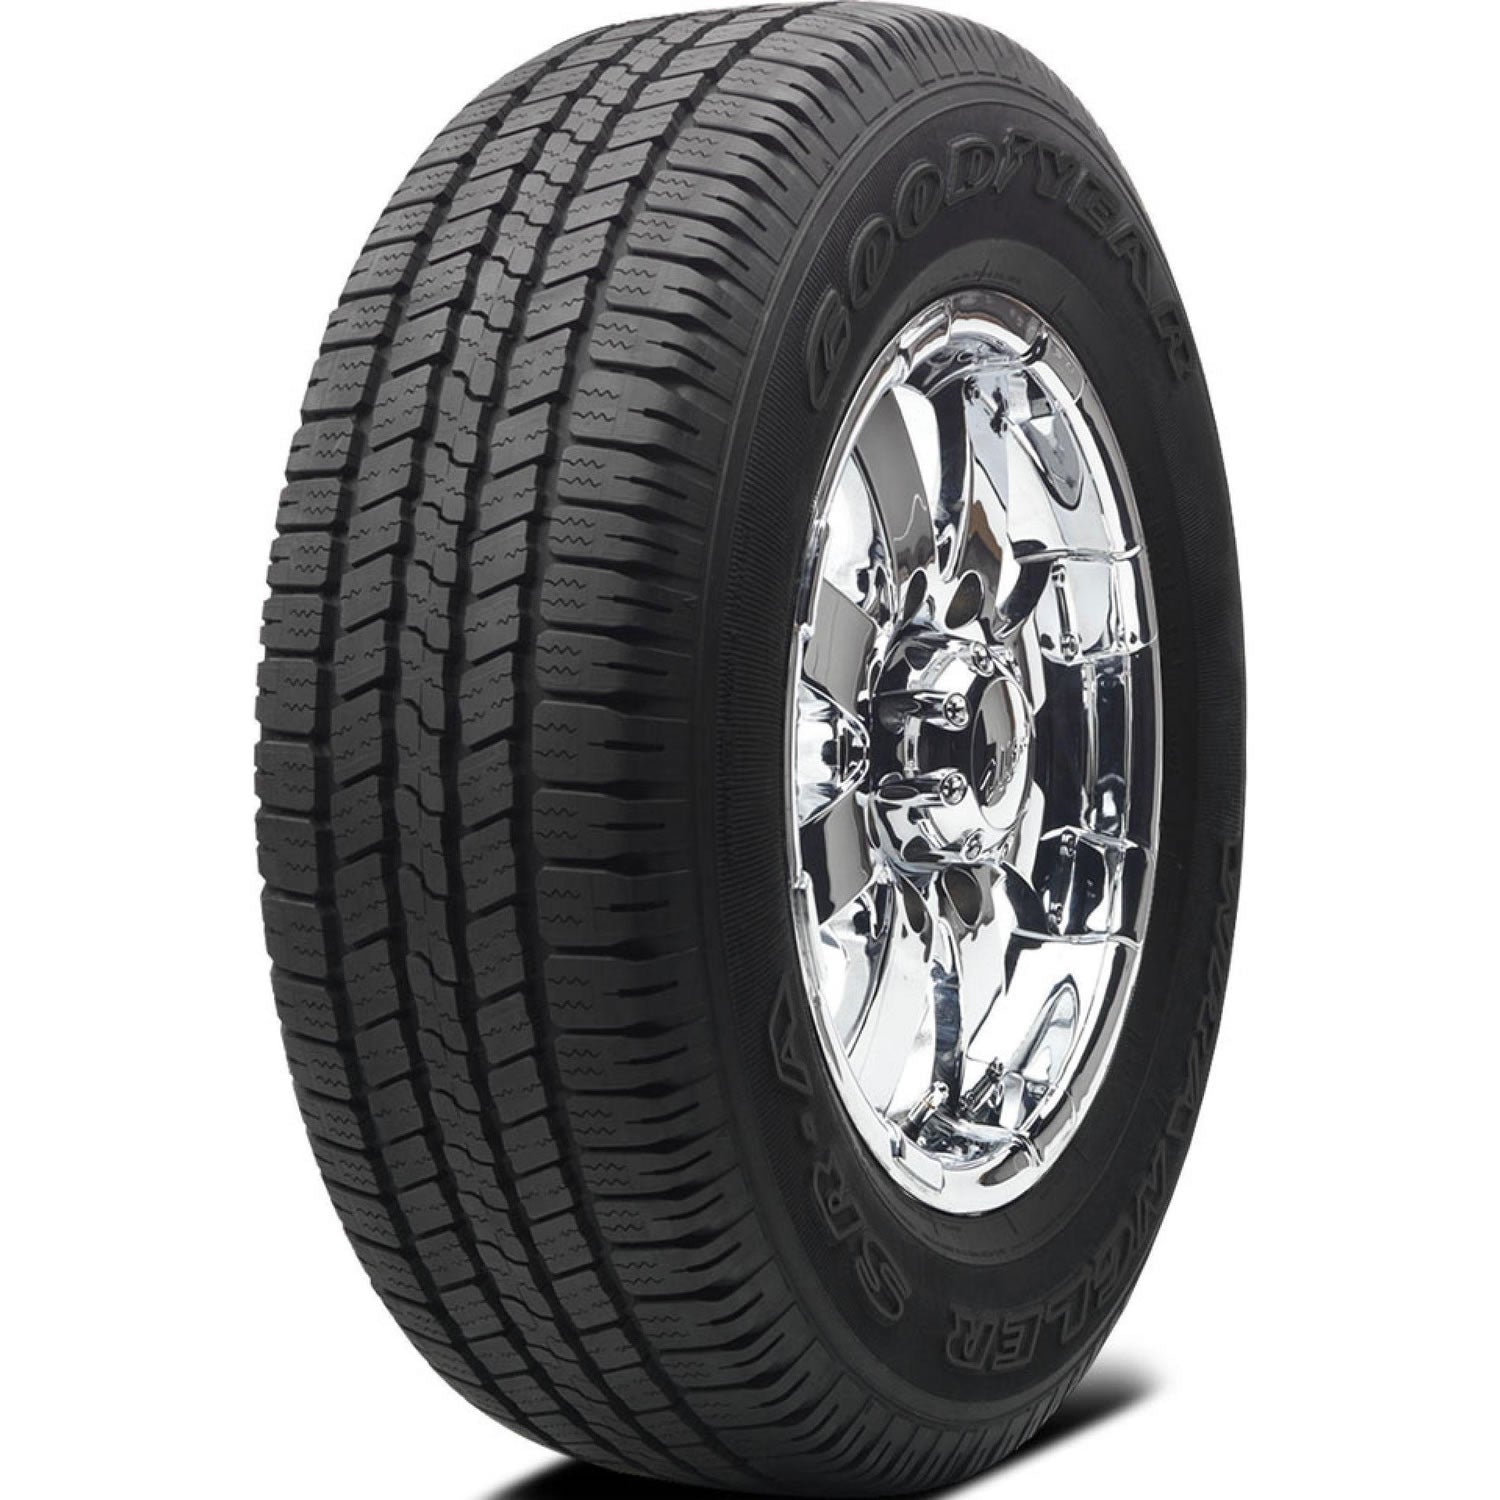 GOODYEAR WRANGLER SR-A P265/70R16 (30.6X10.7R 16) Tires